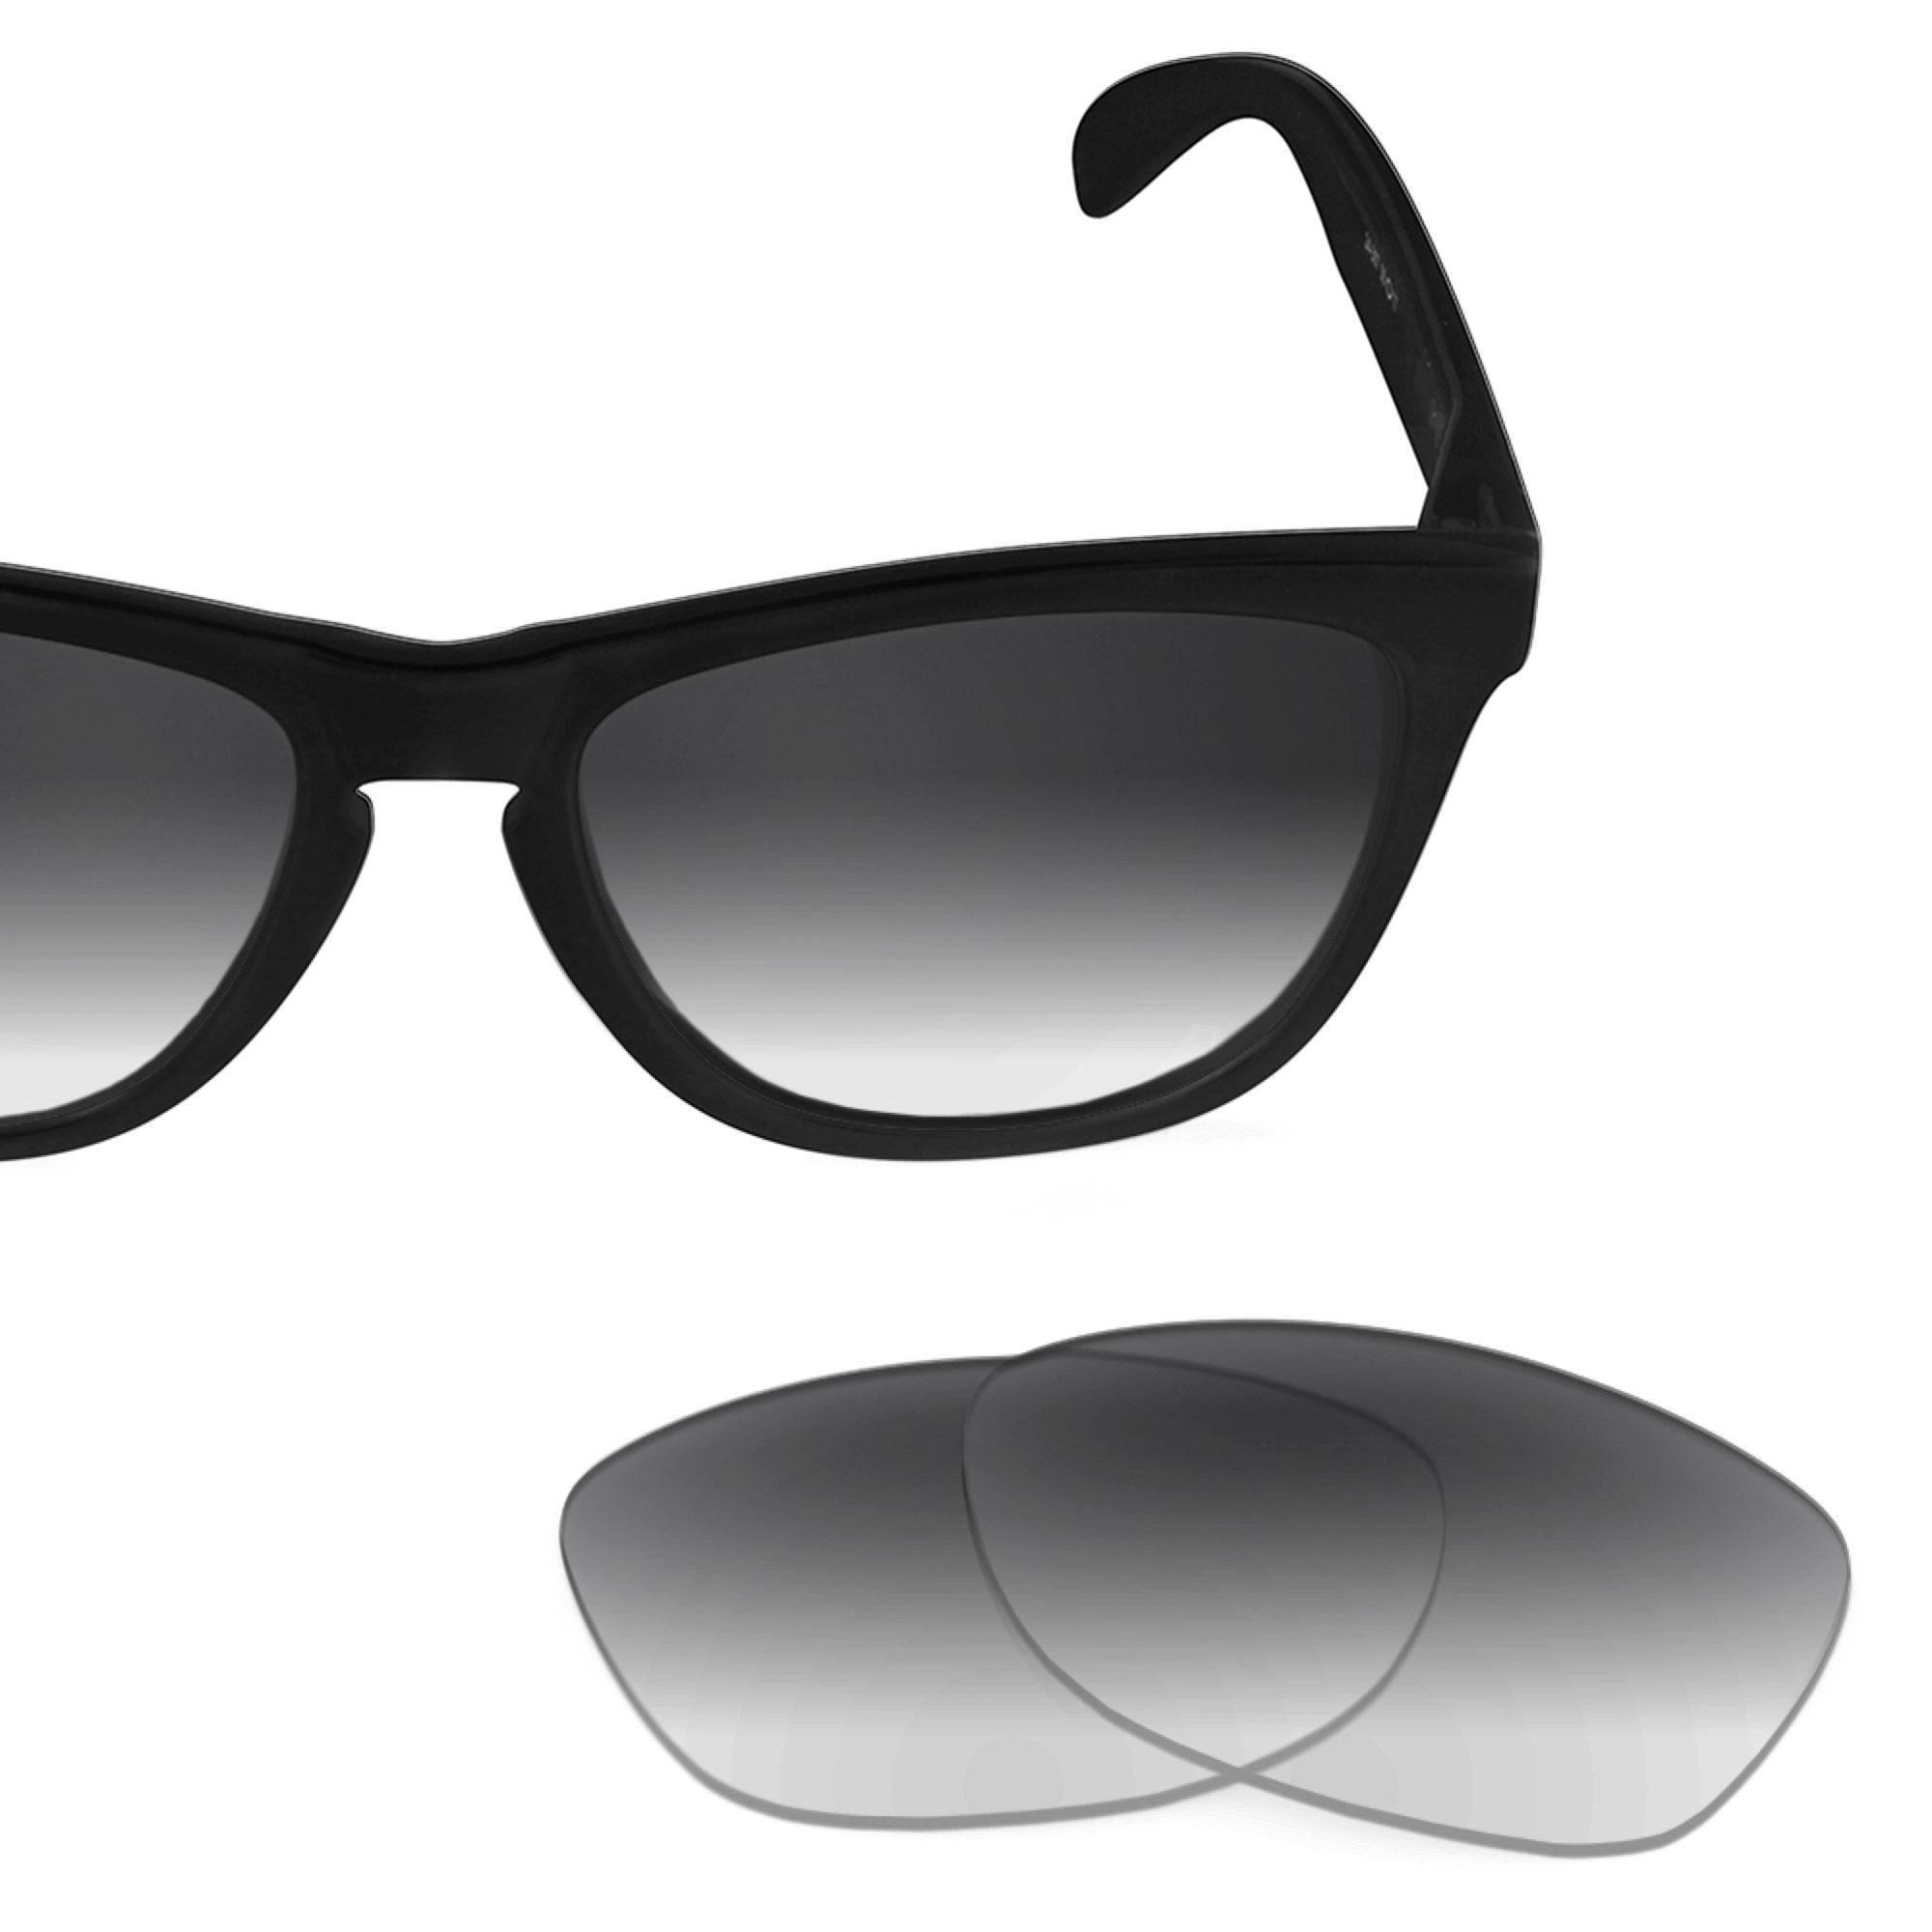 Oakley Frogskins Elite Polarized Black Chrome Mirror Replacement Lenses - by Revant Optics